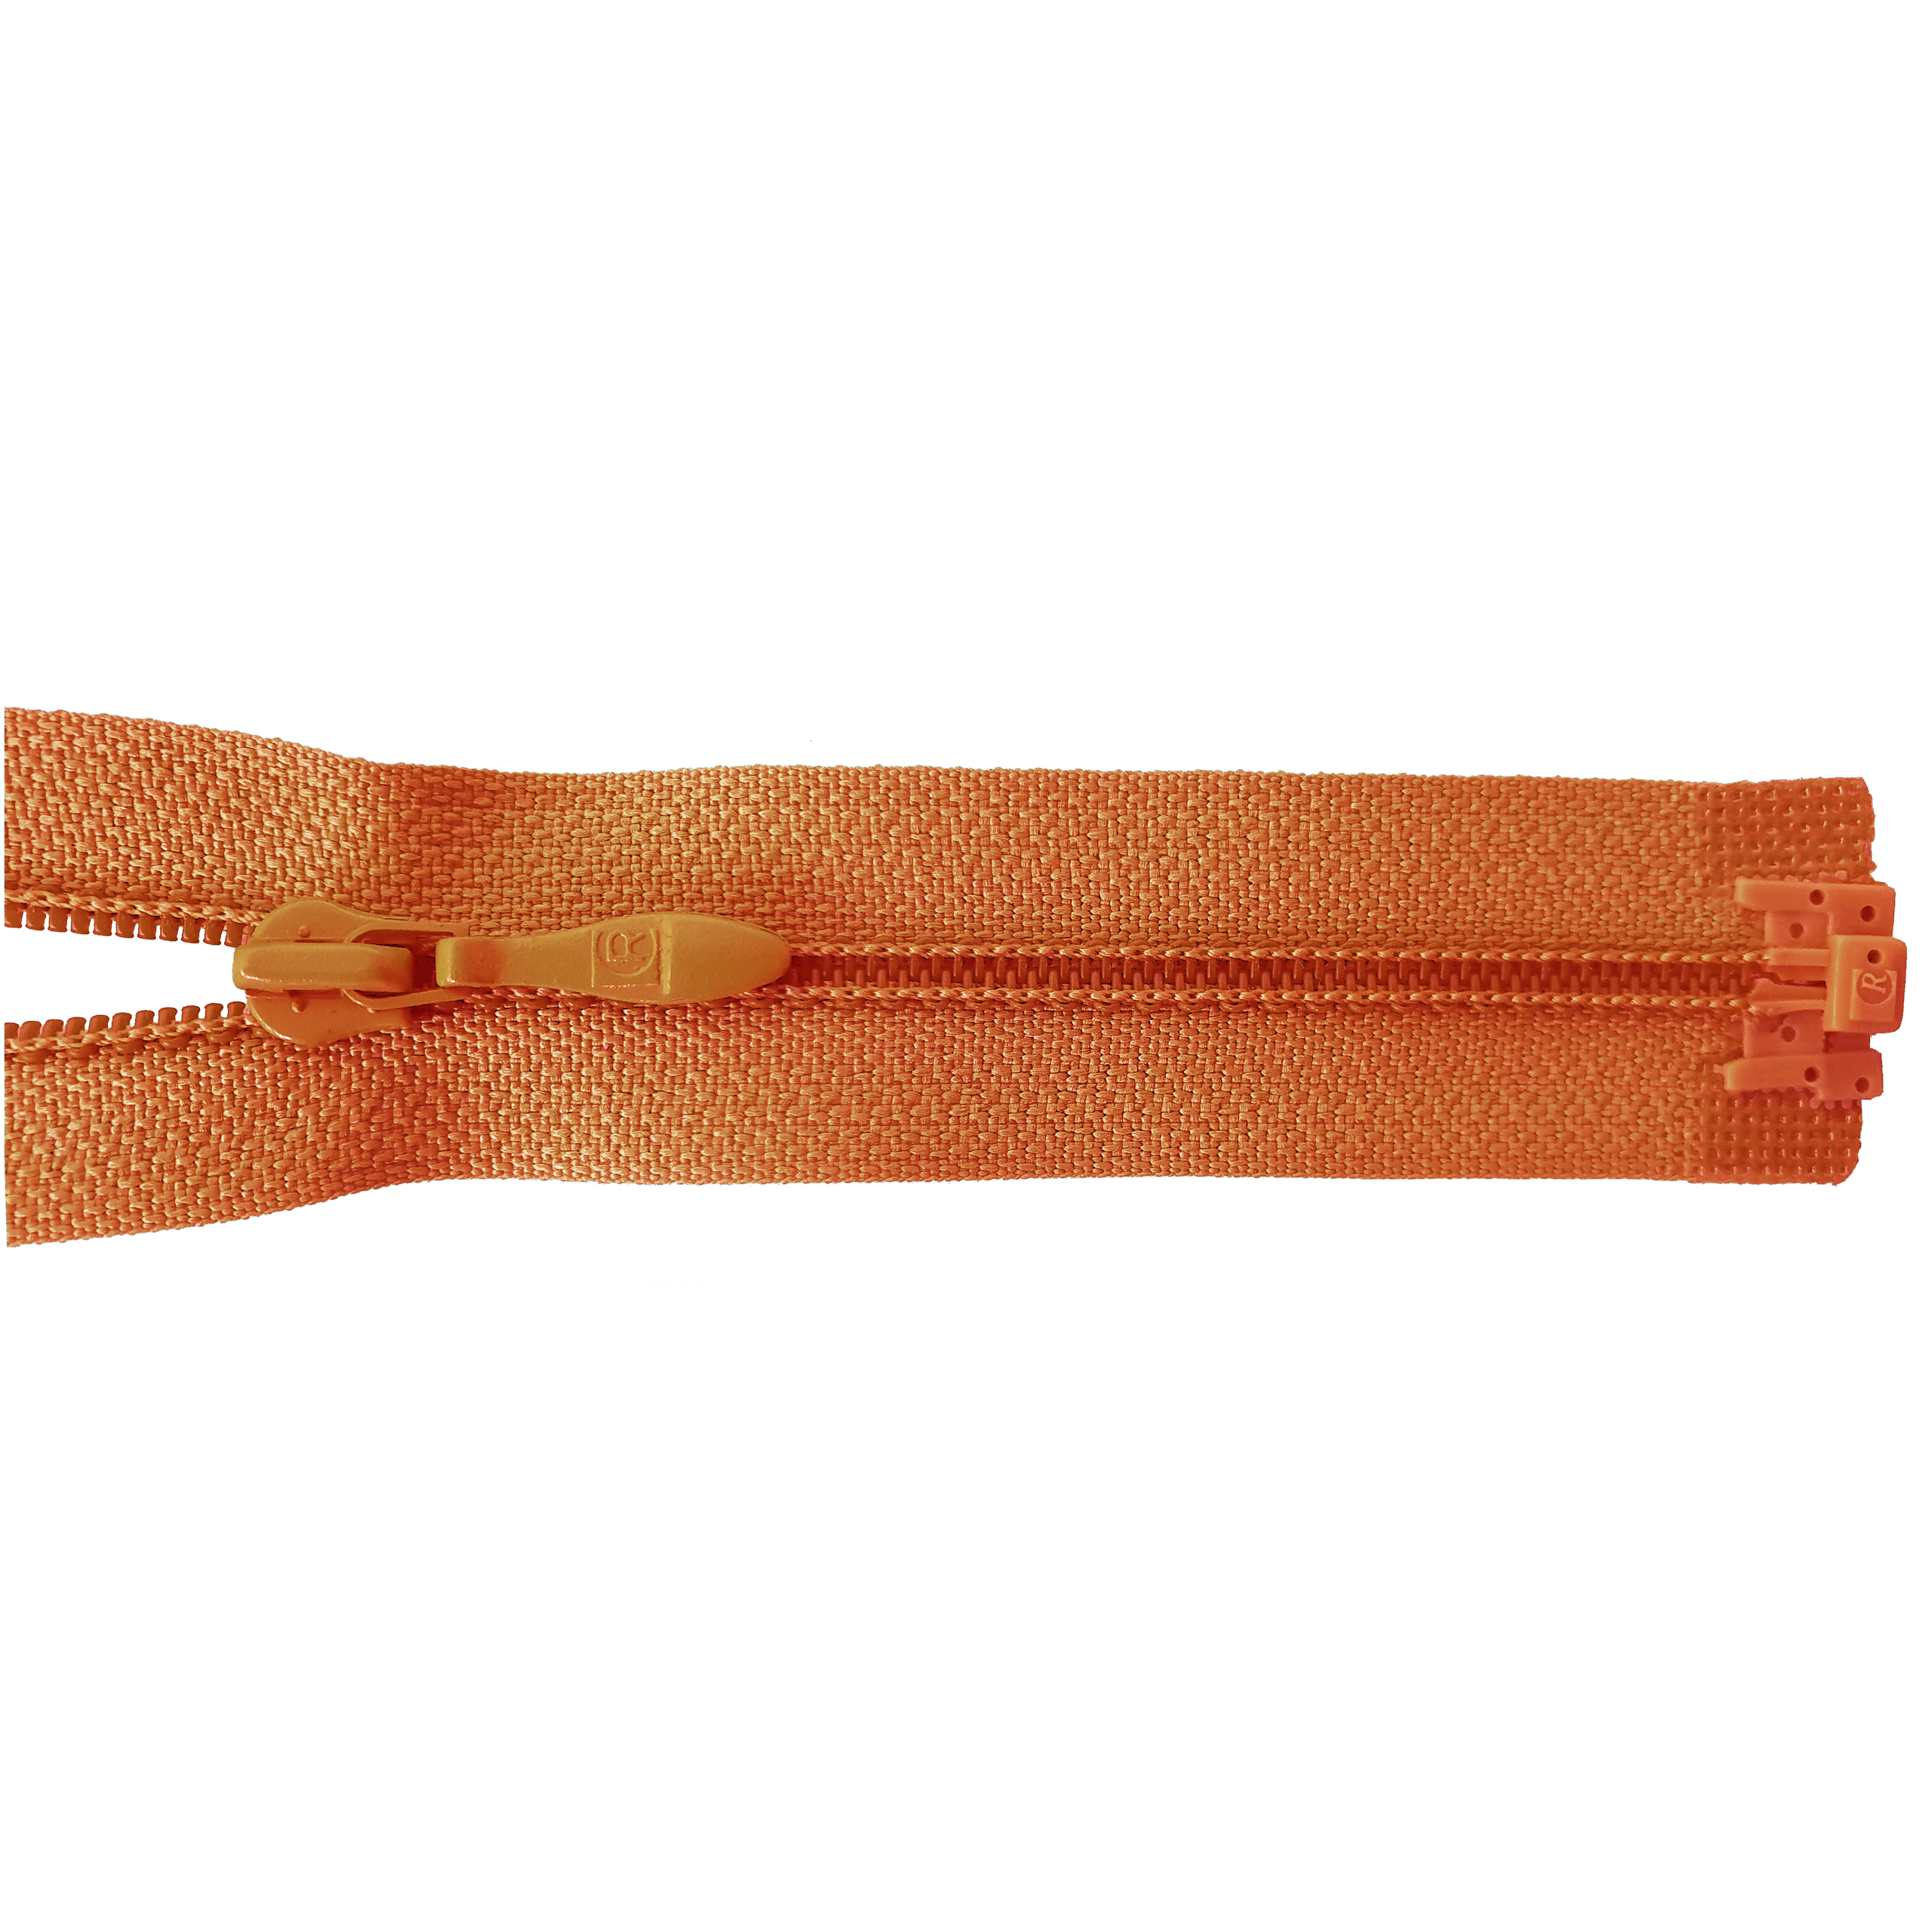 zipper 60cm,divisible, PES spiral, fein, brownish orange